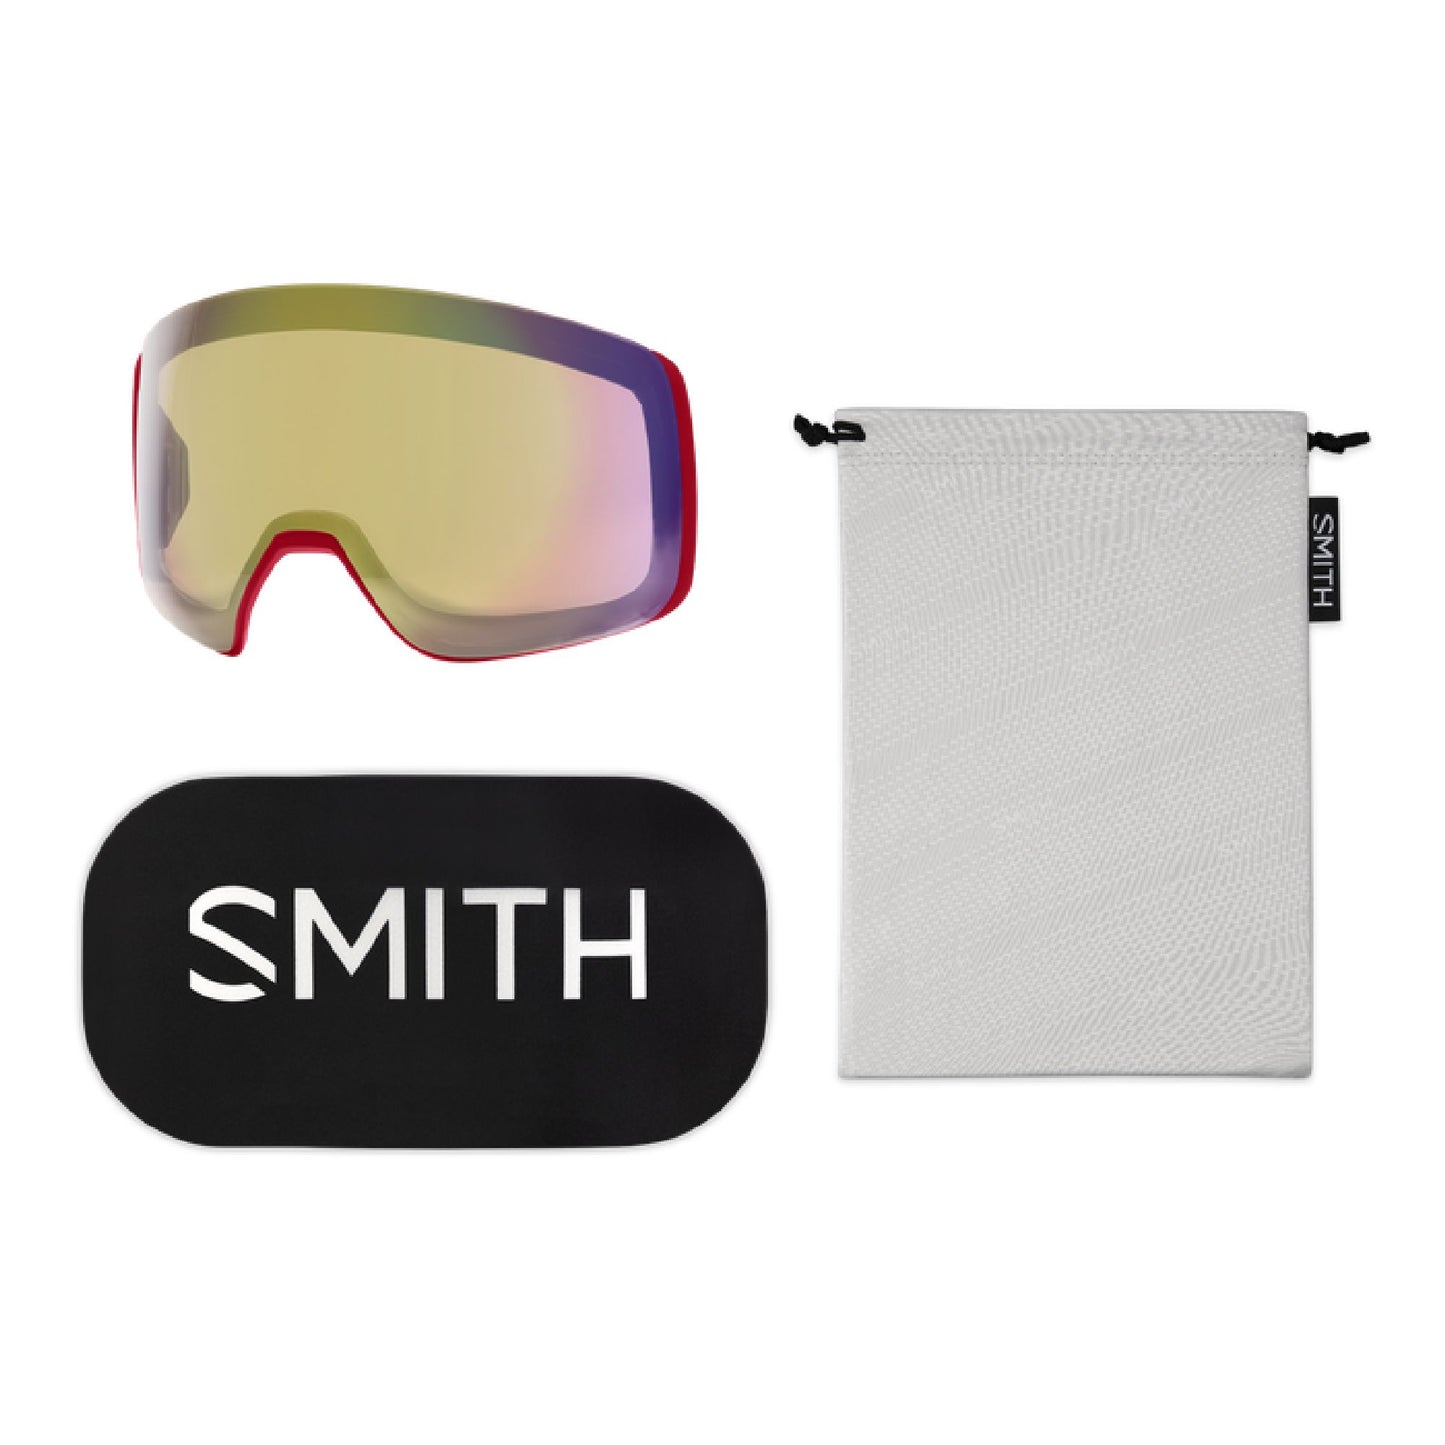 Smith 4D MAG Snow Goggle Black / ChromaPop Sun Red Mirror Snow Goggles